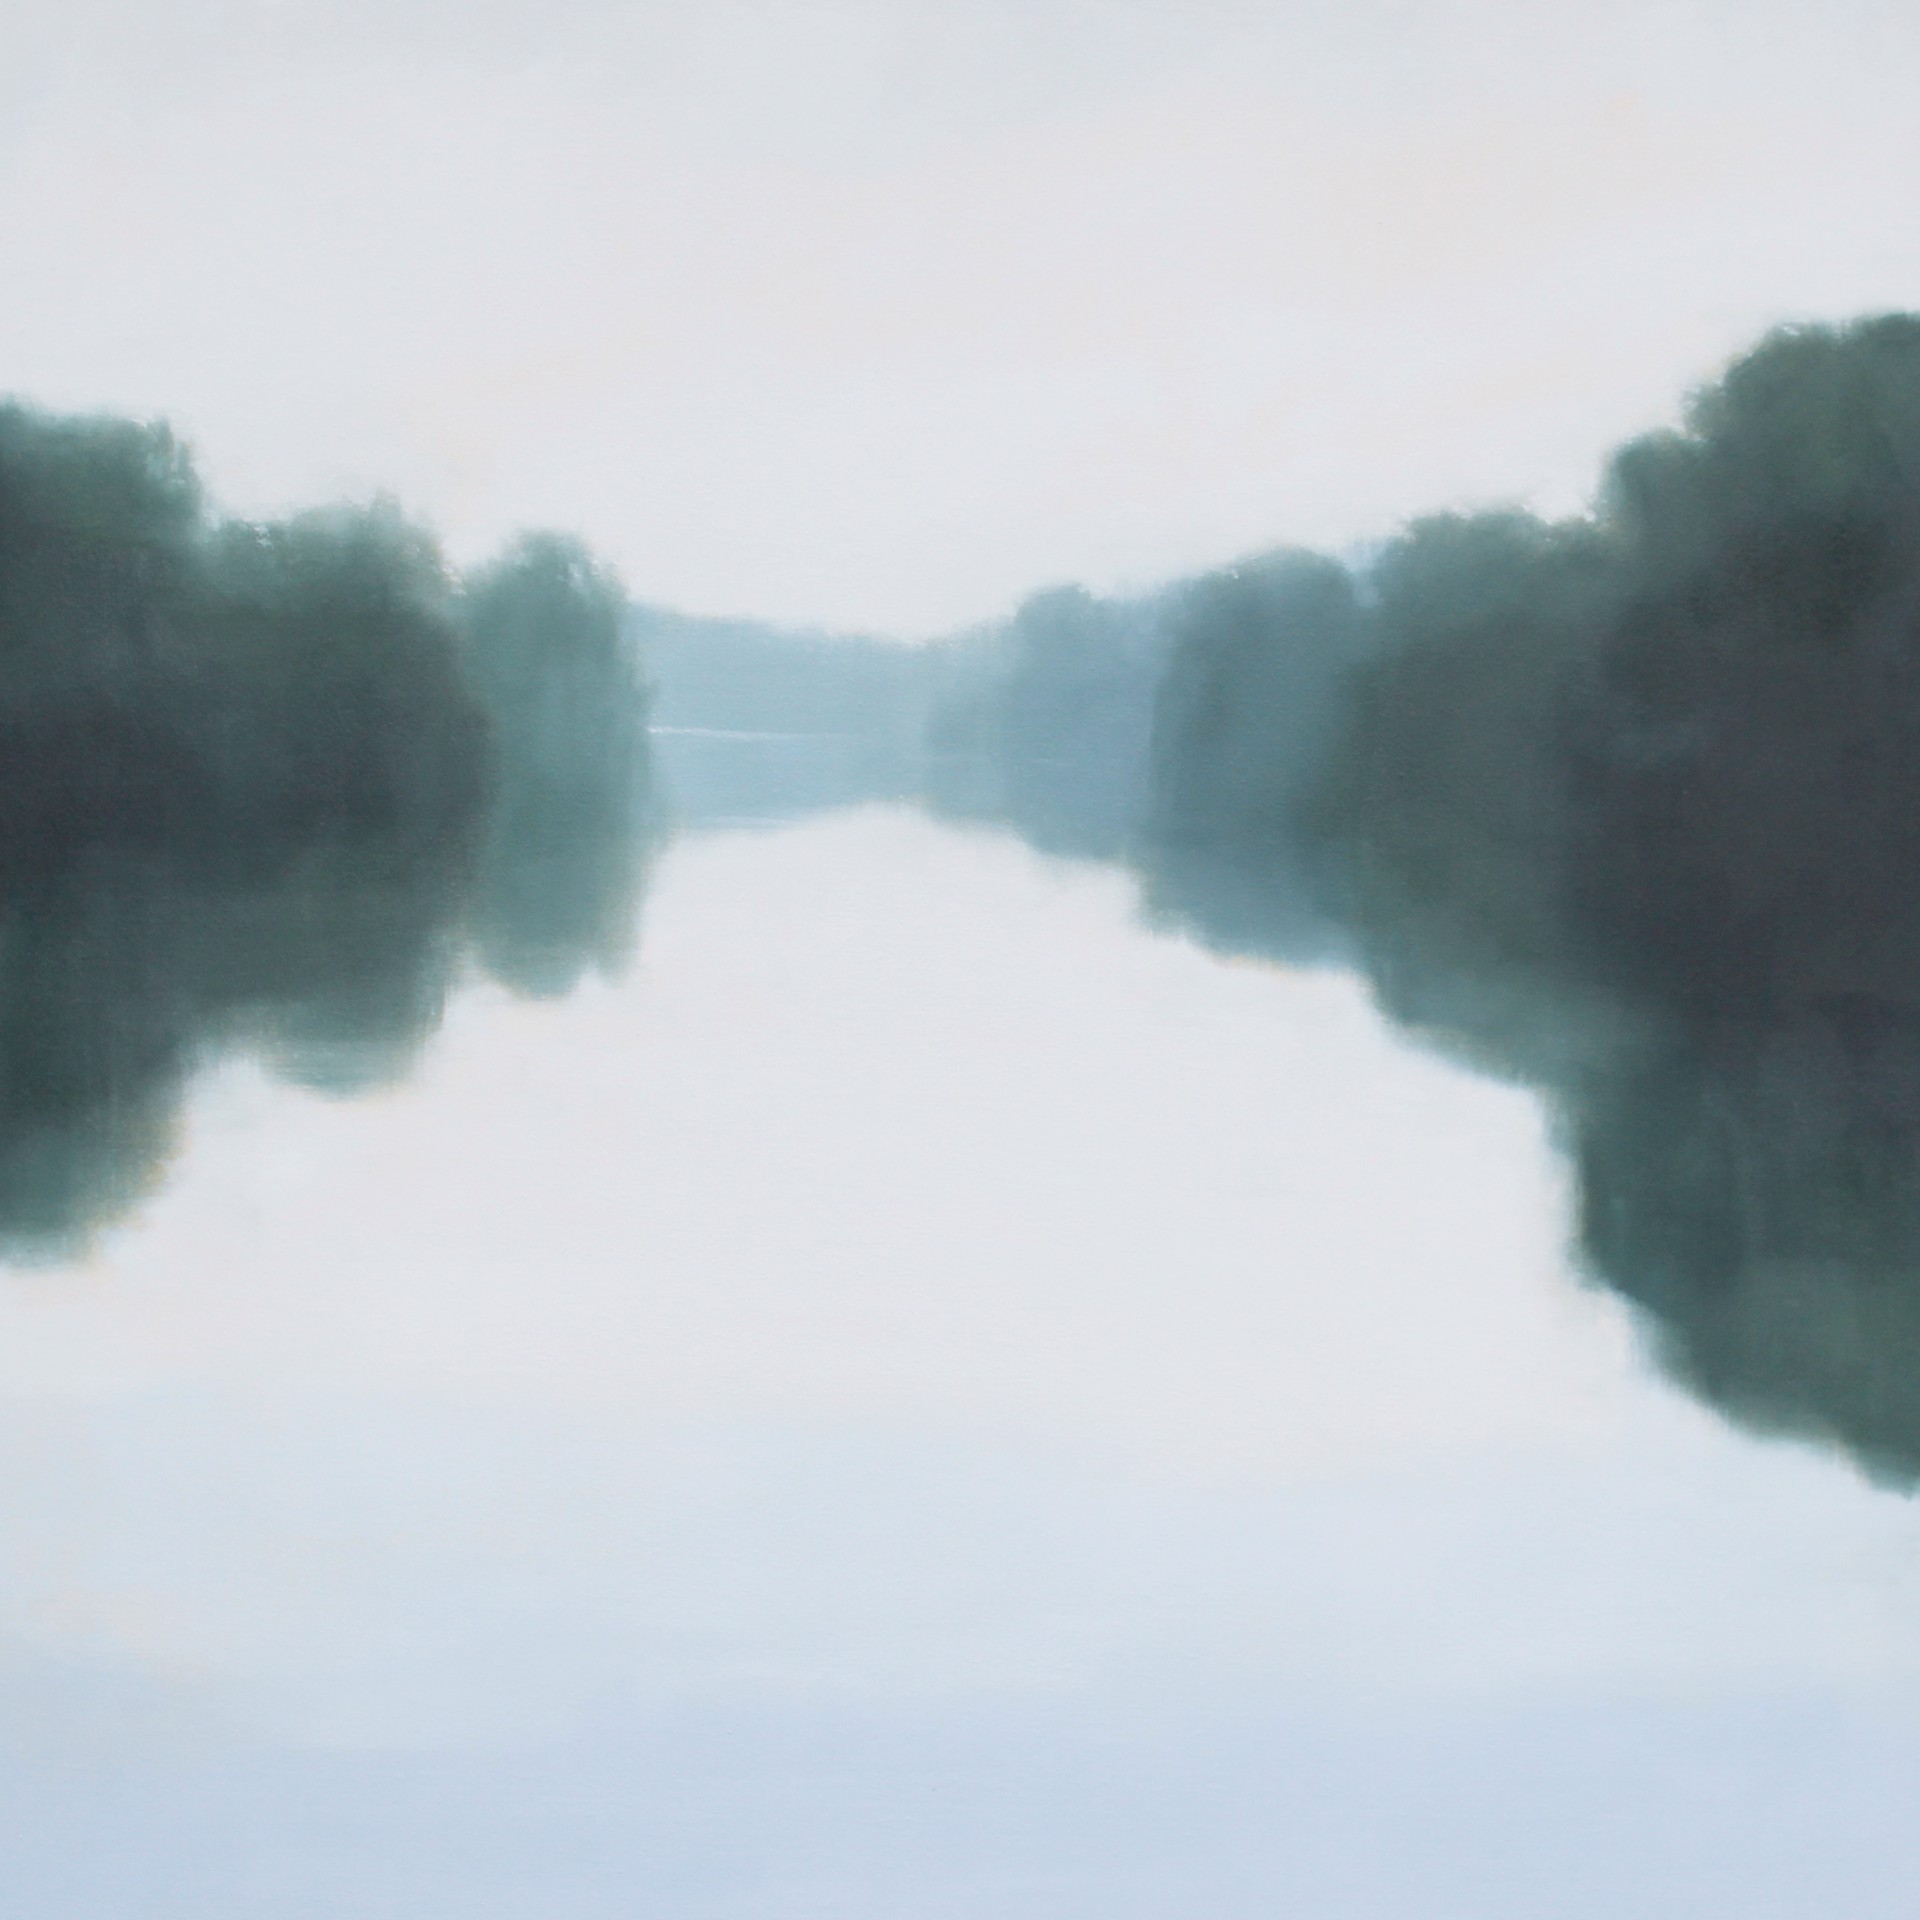 River Pause by Megan Lightell